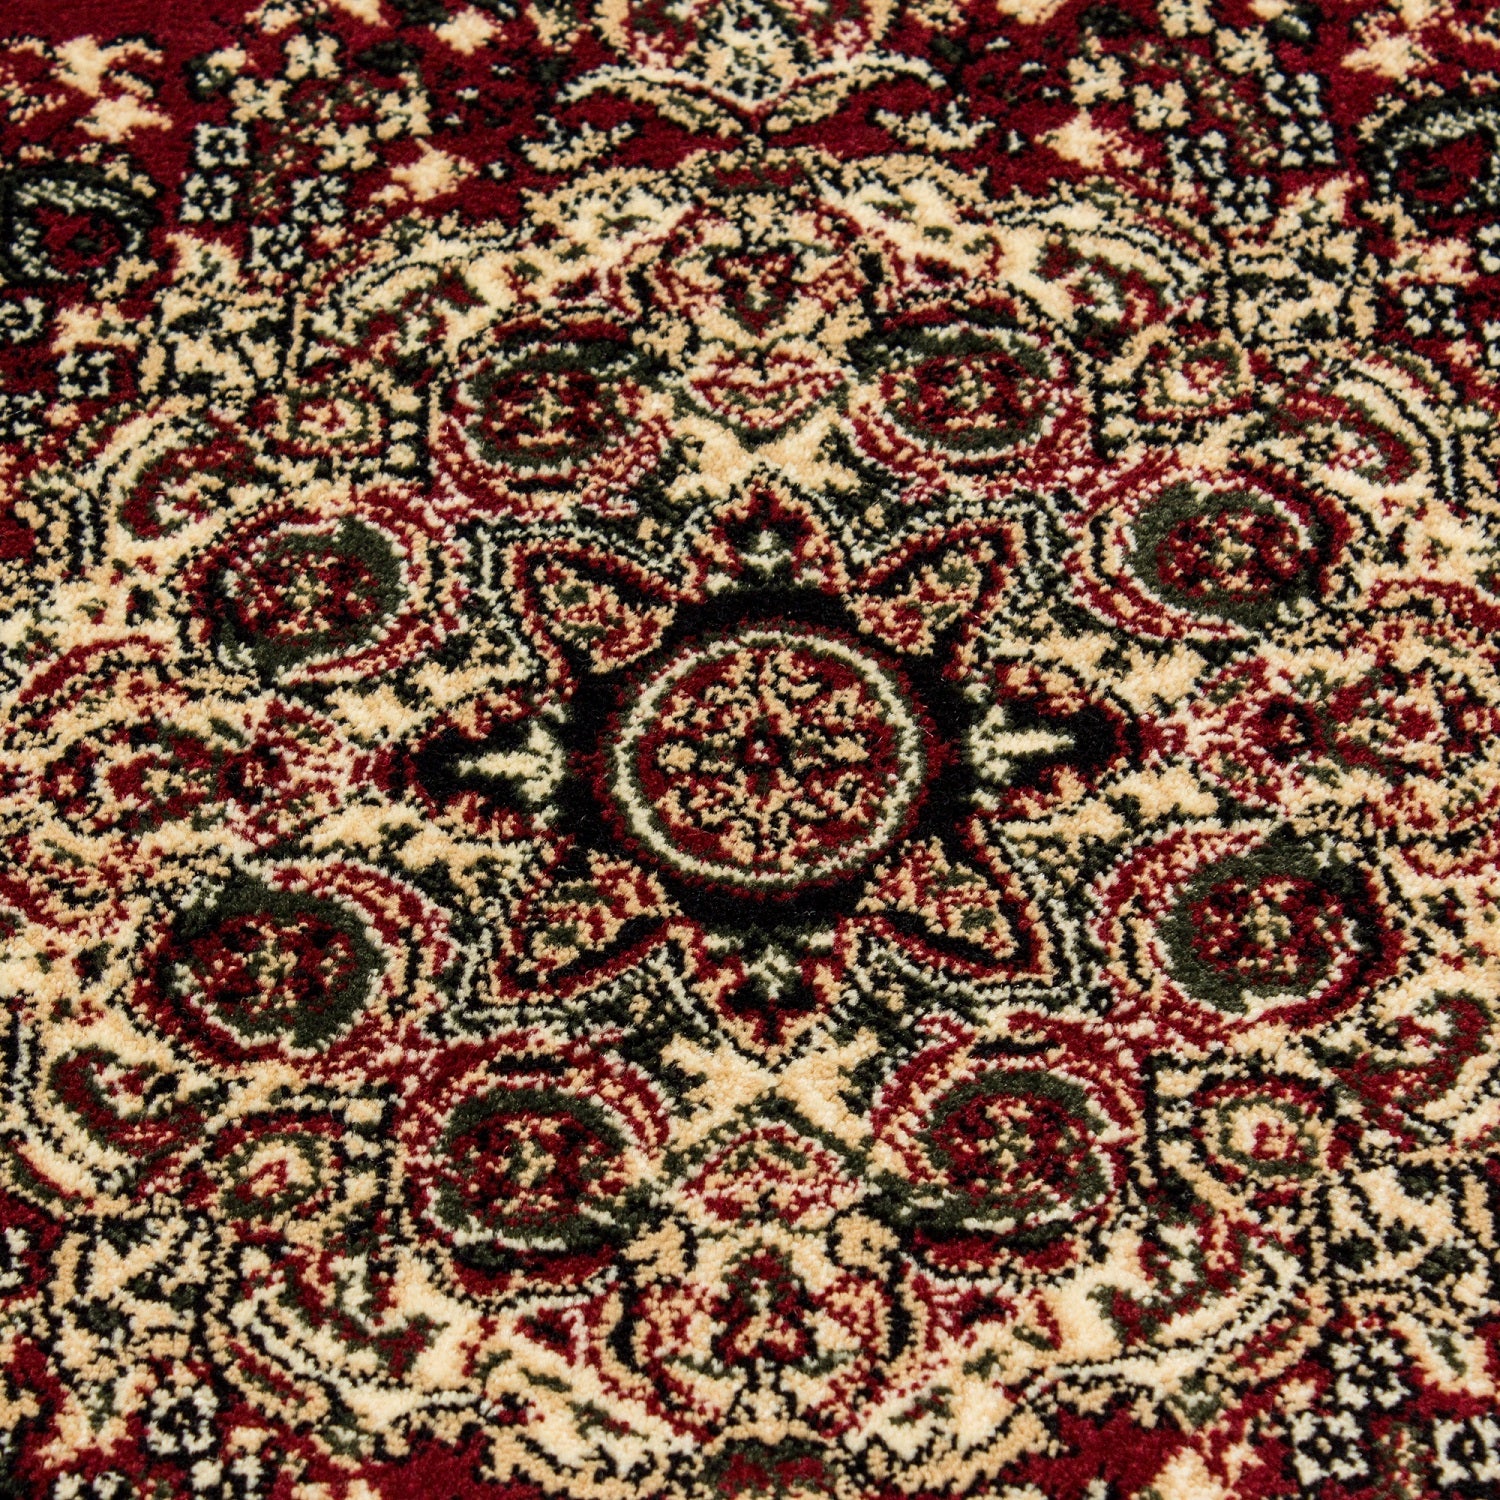 Klassik Orient Teppich Edle Bordüre Ornament Muster Wohnzimmerteppich Rot Beige